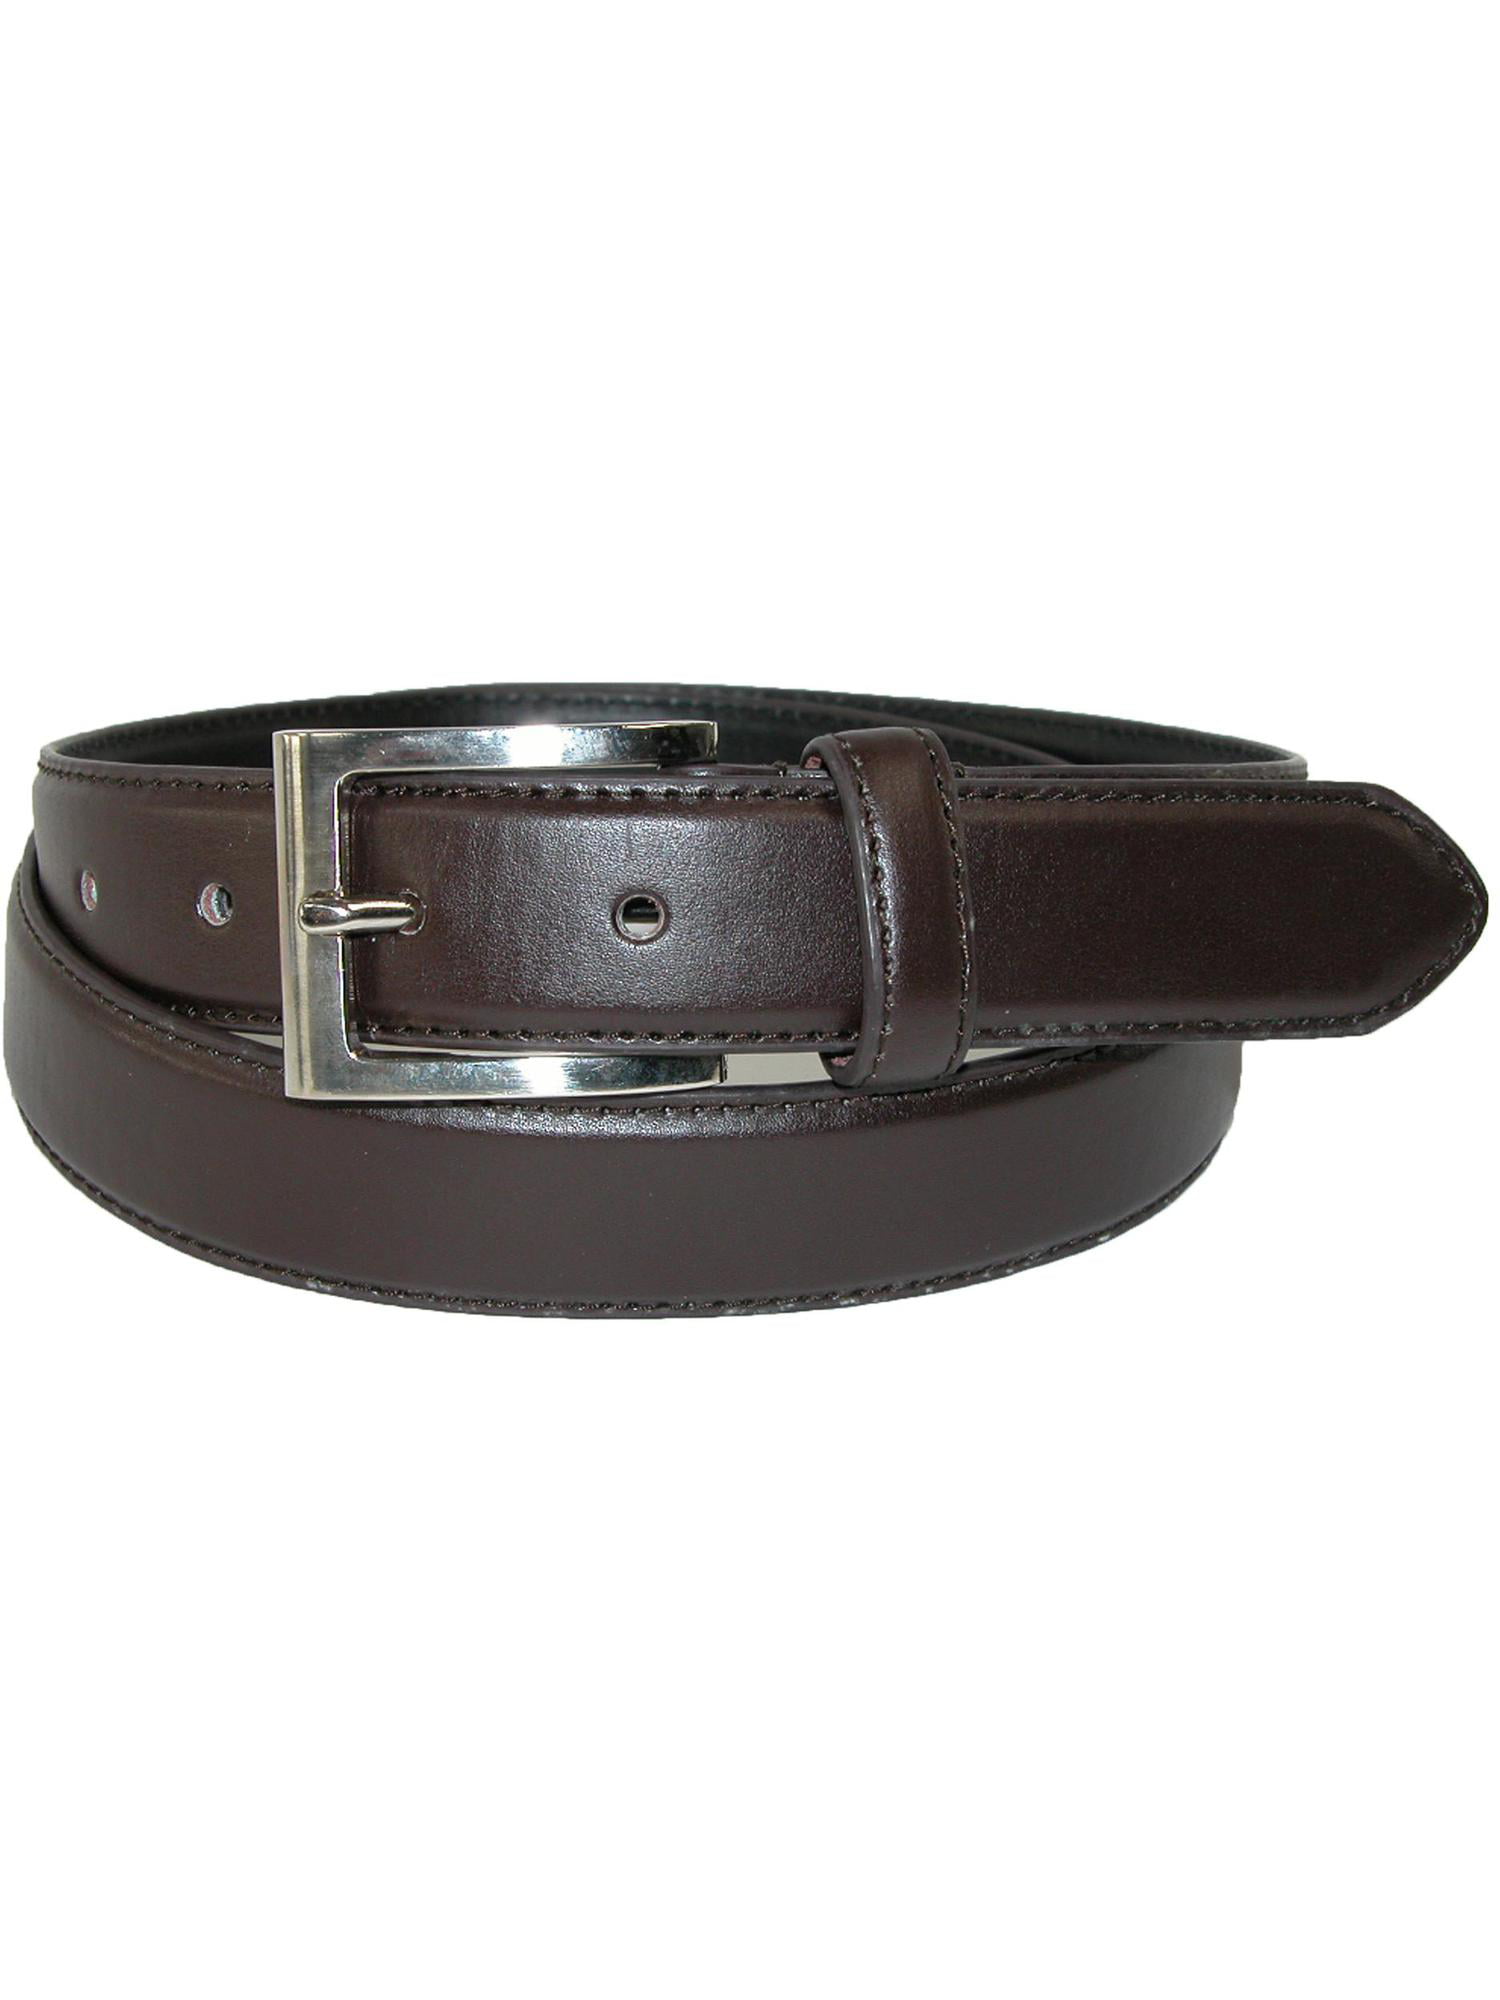 Men's Black or Brown Dress Belt Genuine Leather Mens Casual W/ Buckle 1 1/4 Wide 